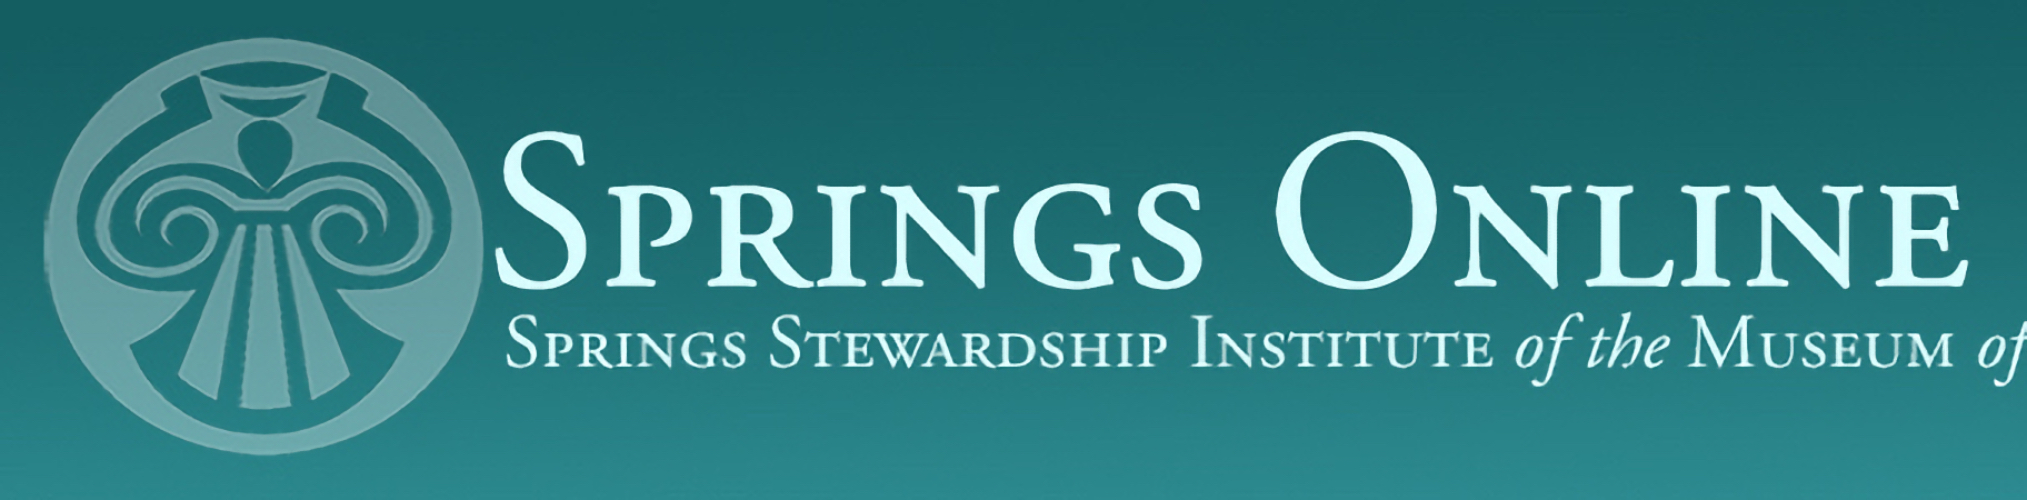 Springs Online logo